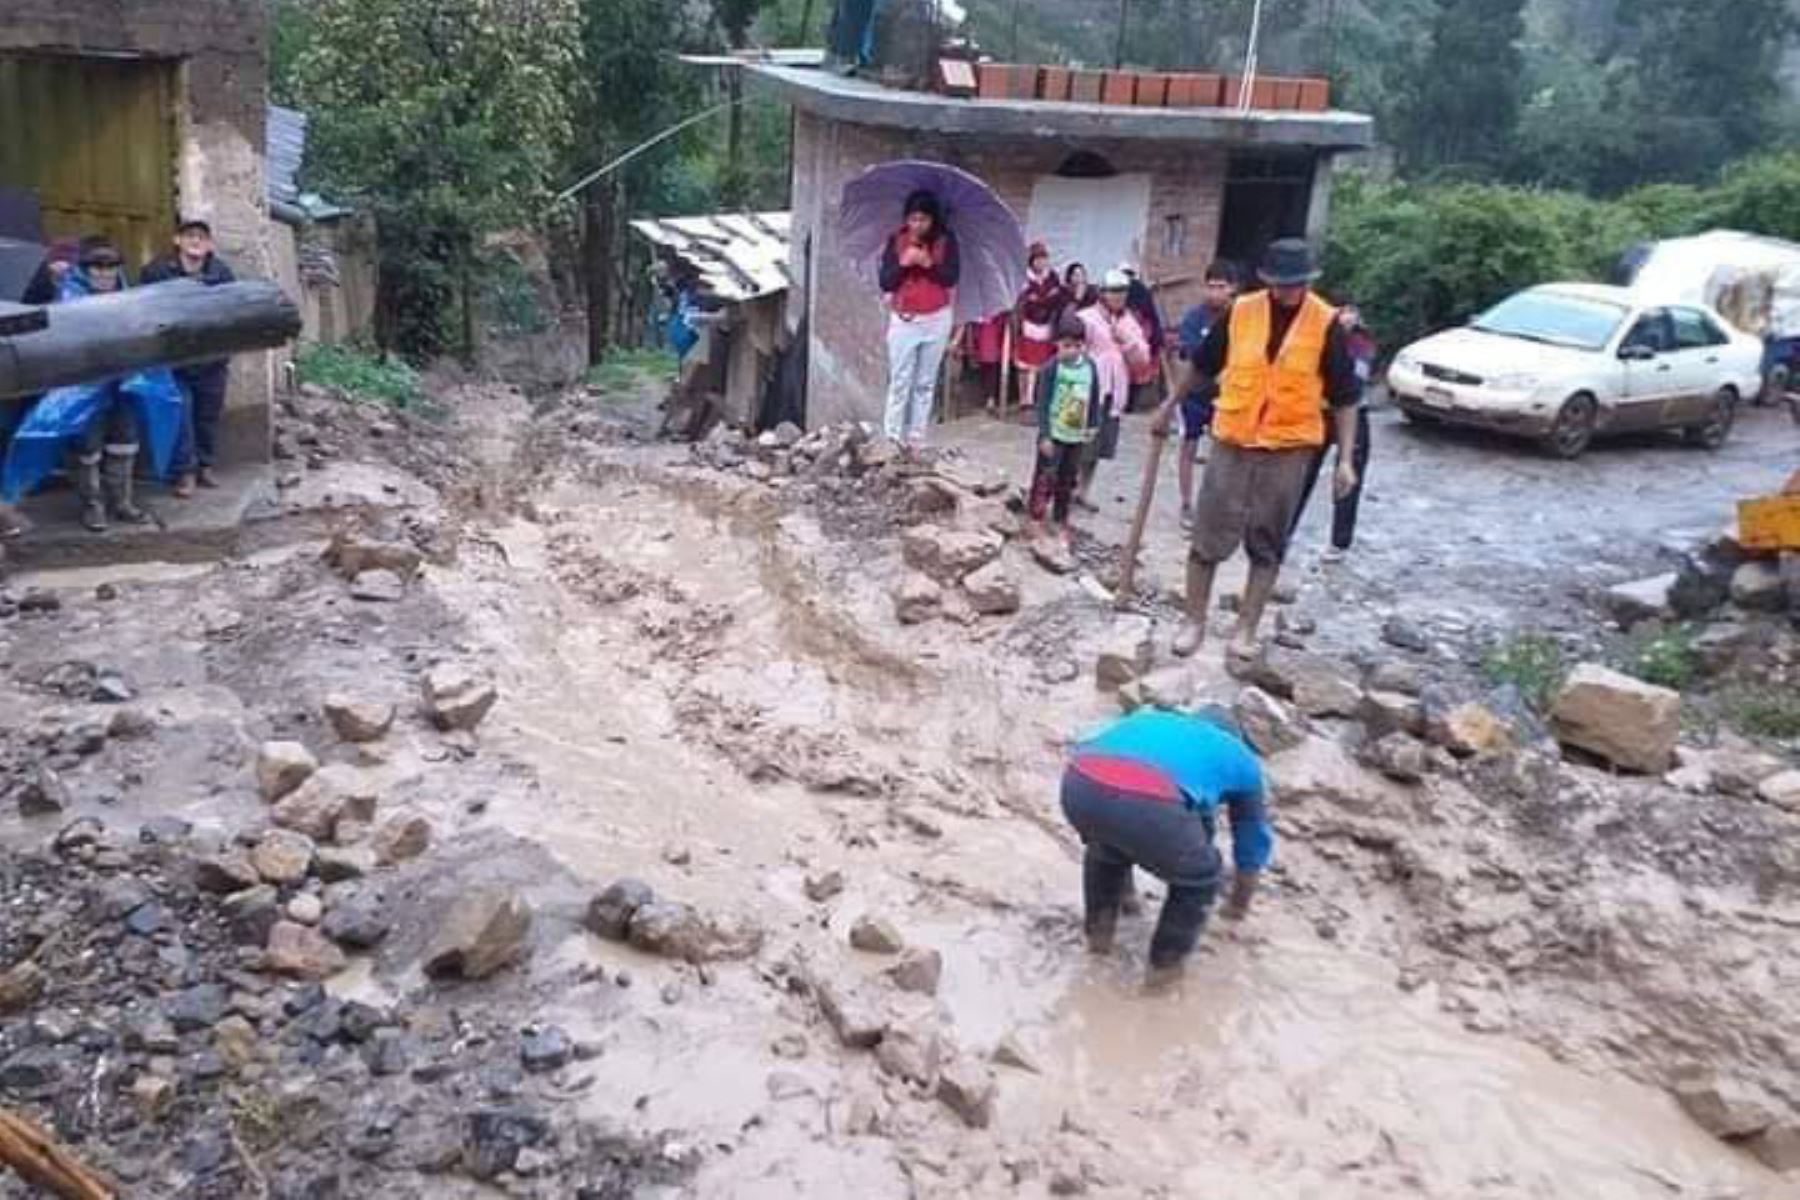 Lluvias intensas provocan huaico que afecta a 20 viviendas ubicadas en centro poblado de provincia de Pomabamba, en Áncash. INTERNET/Medios